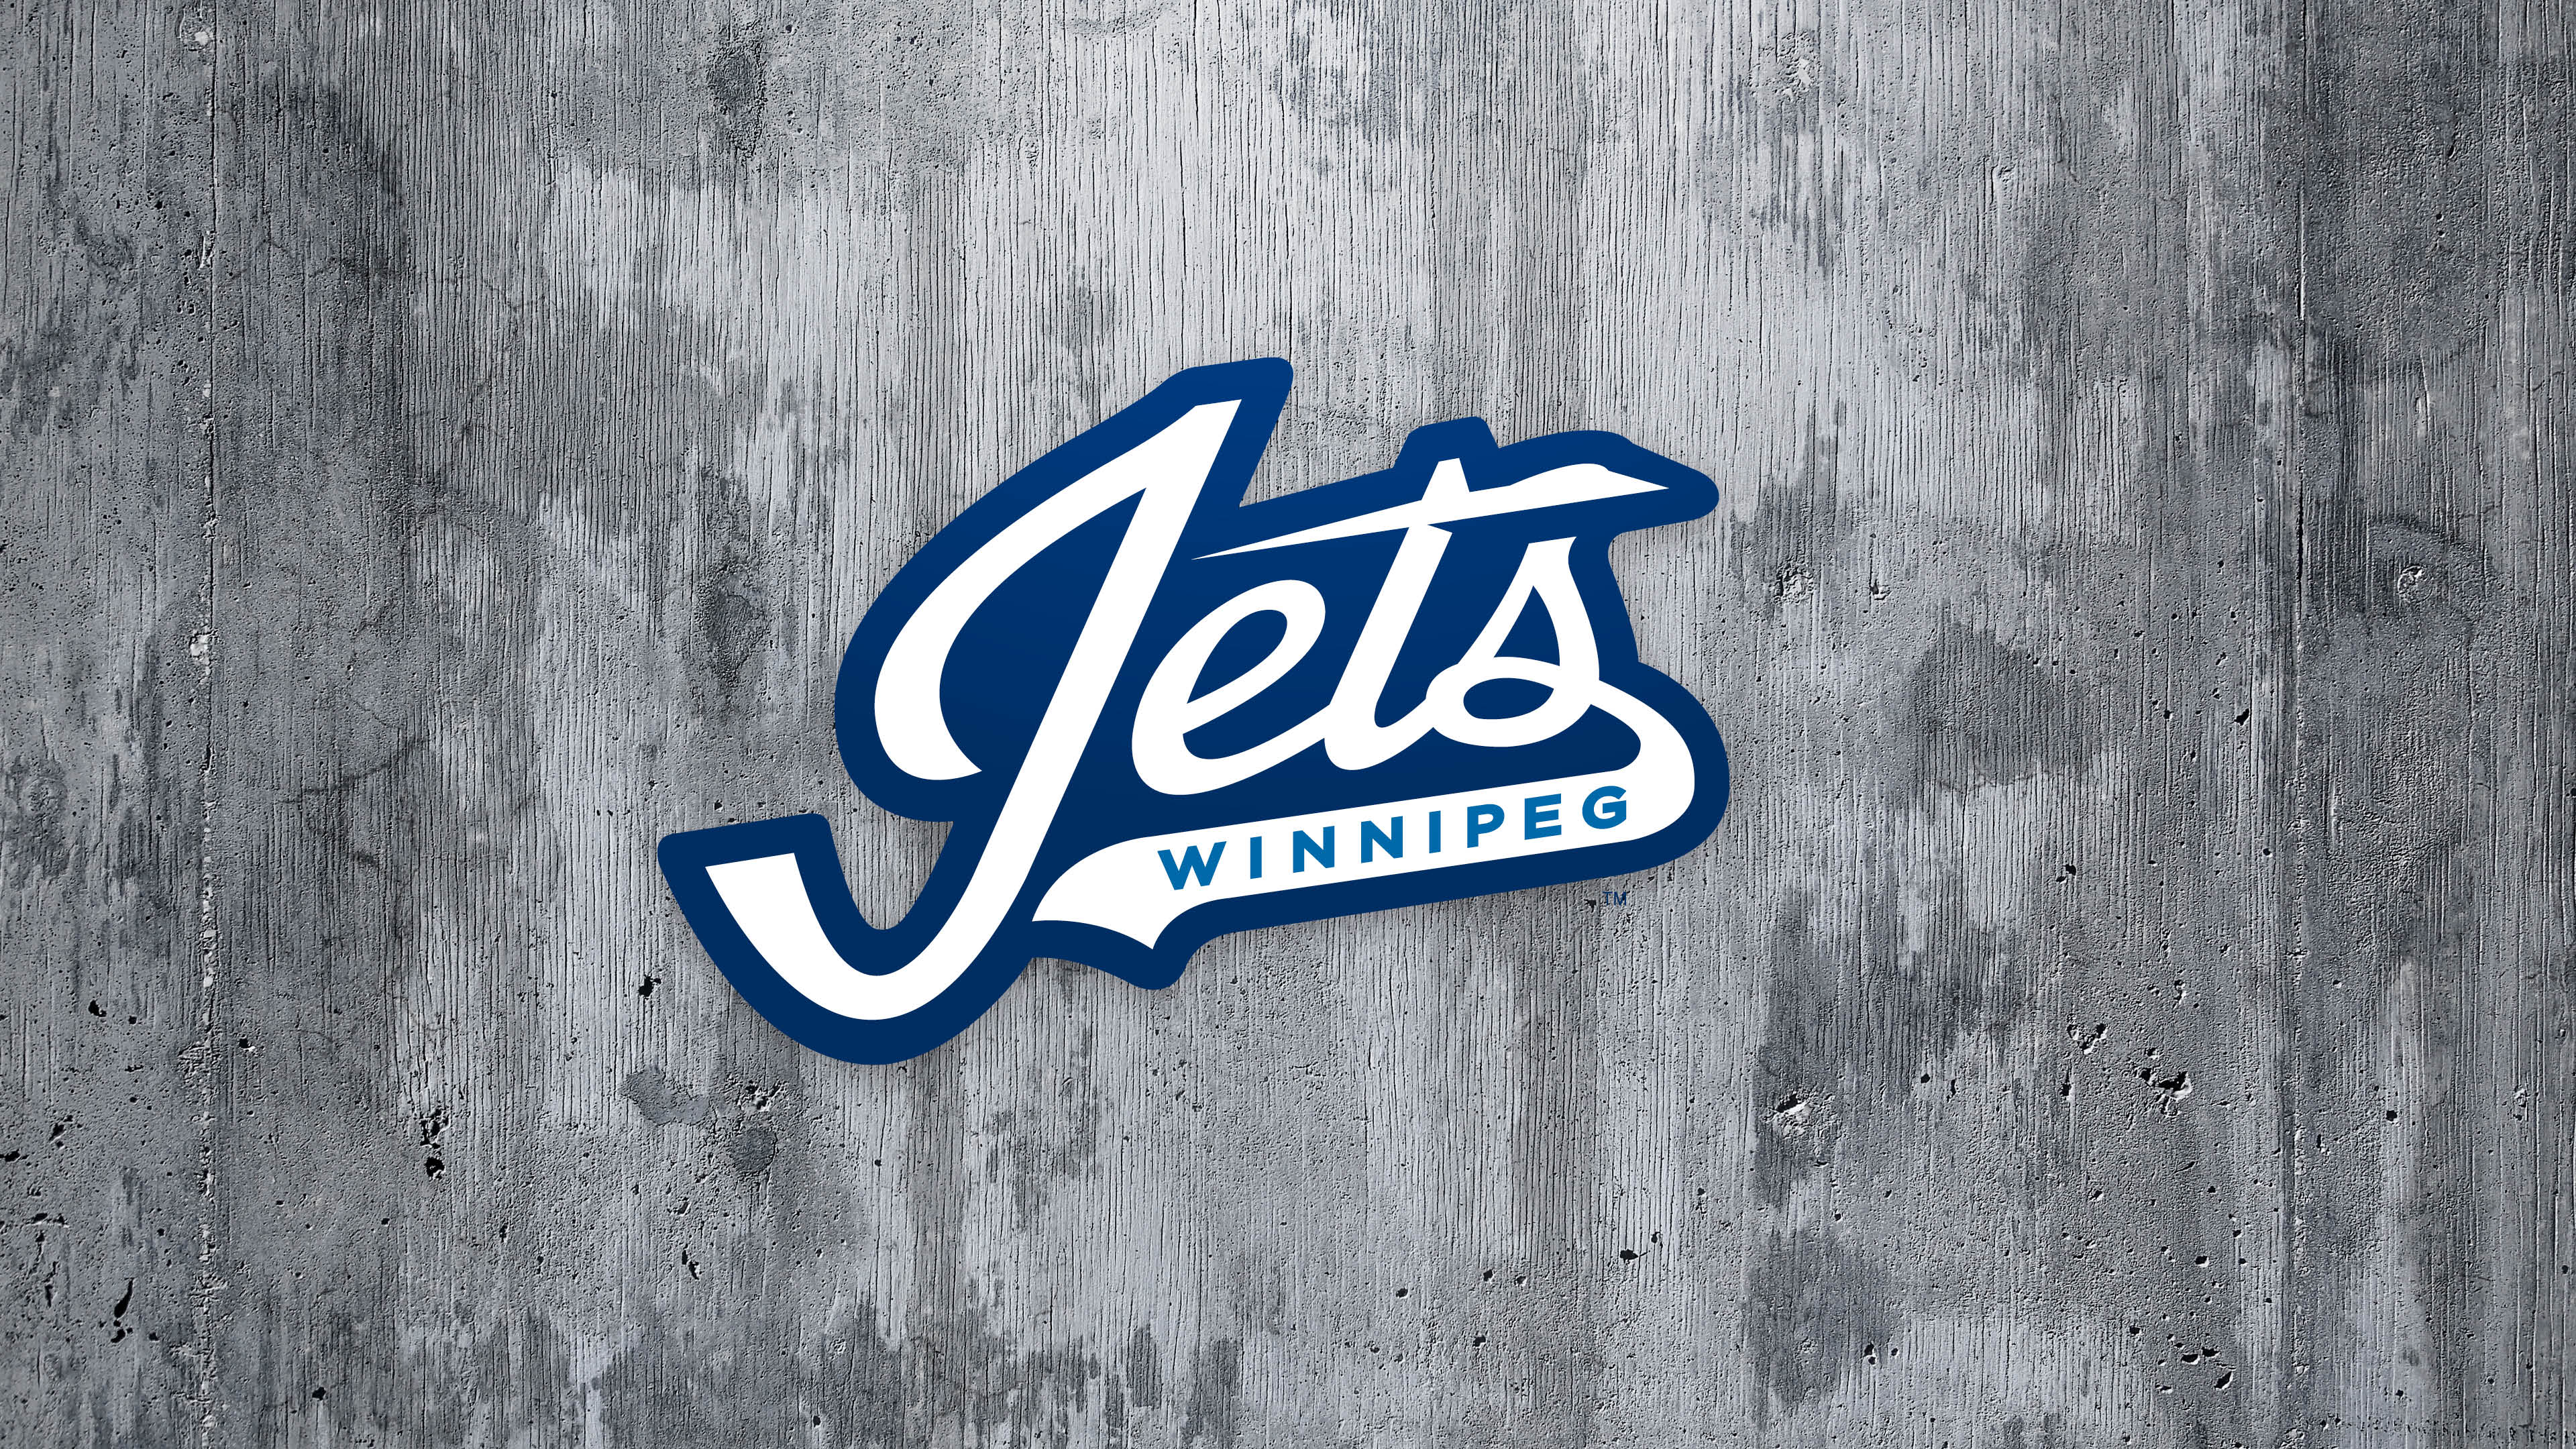 Winnipeg Jet NHL Logo - Desktop & Mobile Wallpapers | Winnipeg Jets